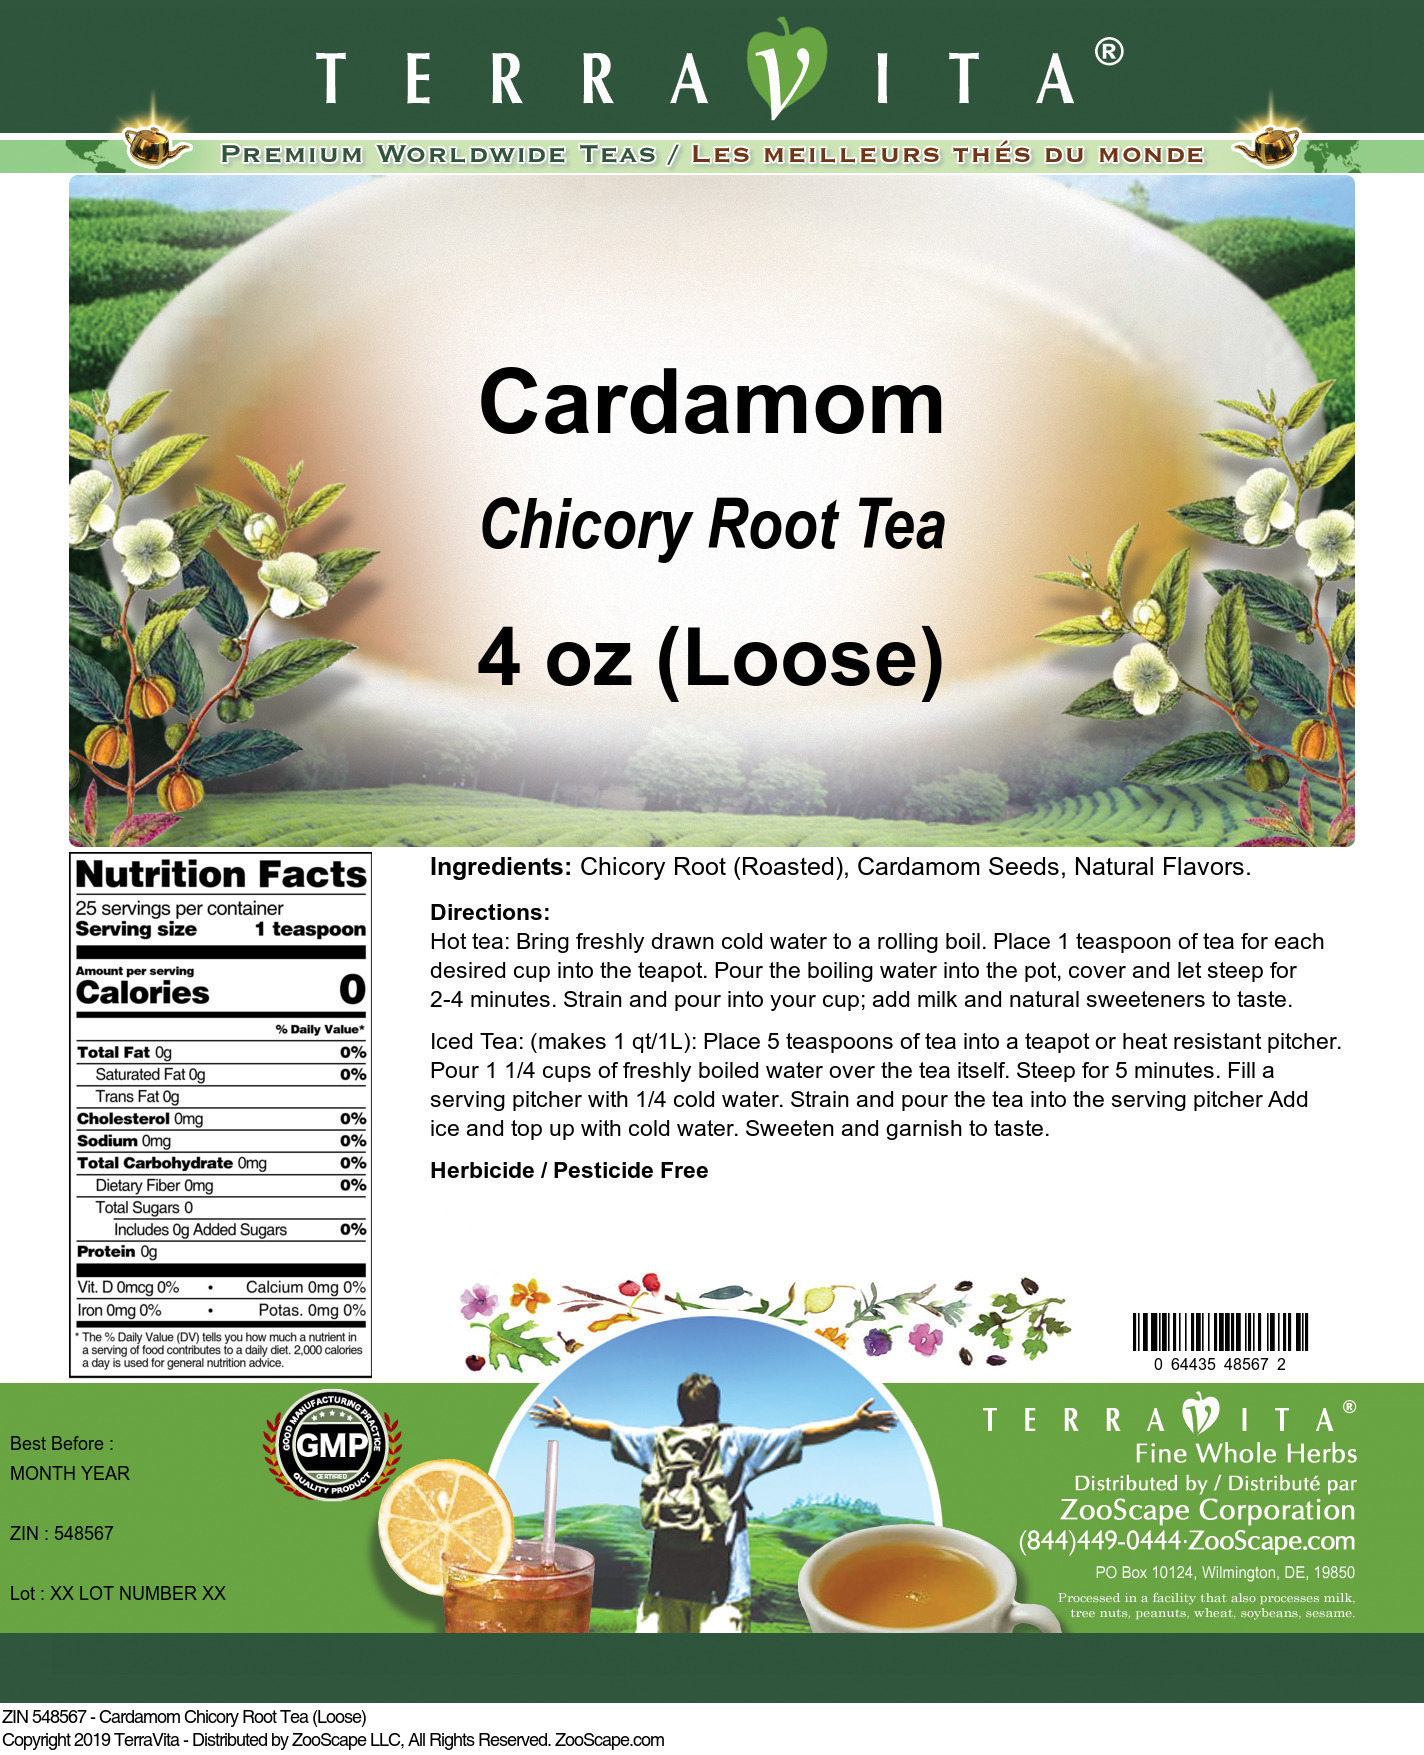 Cardamom Chicory Root Tea (Loose) - Label